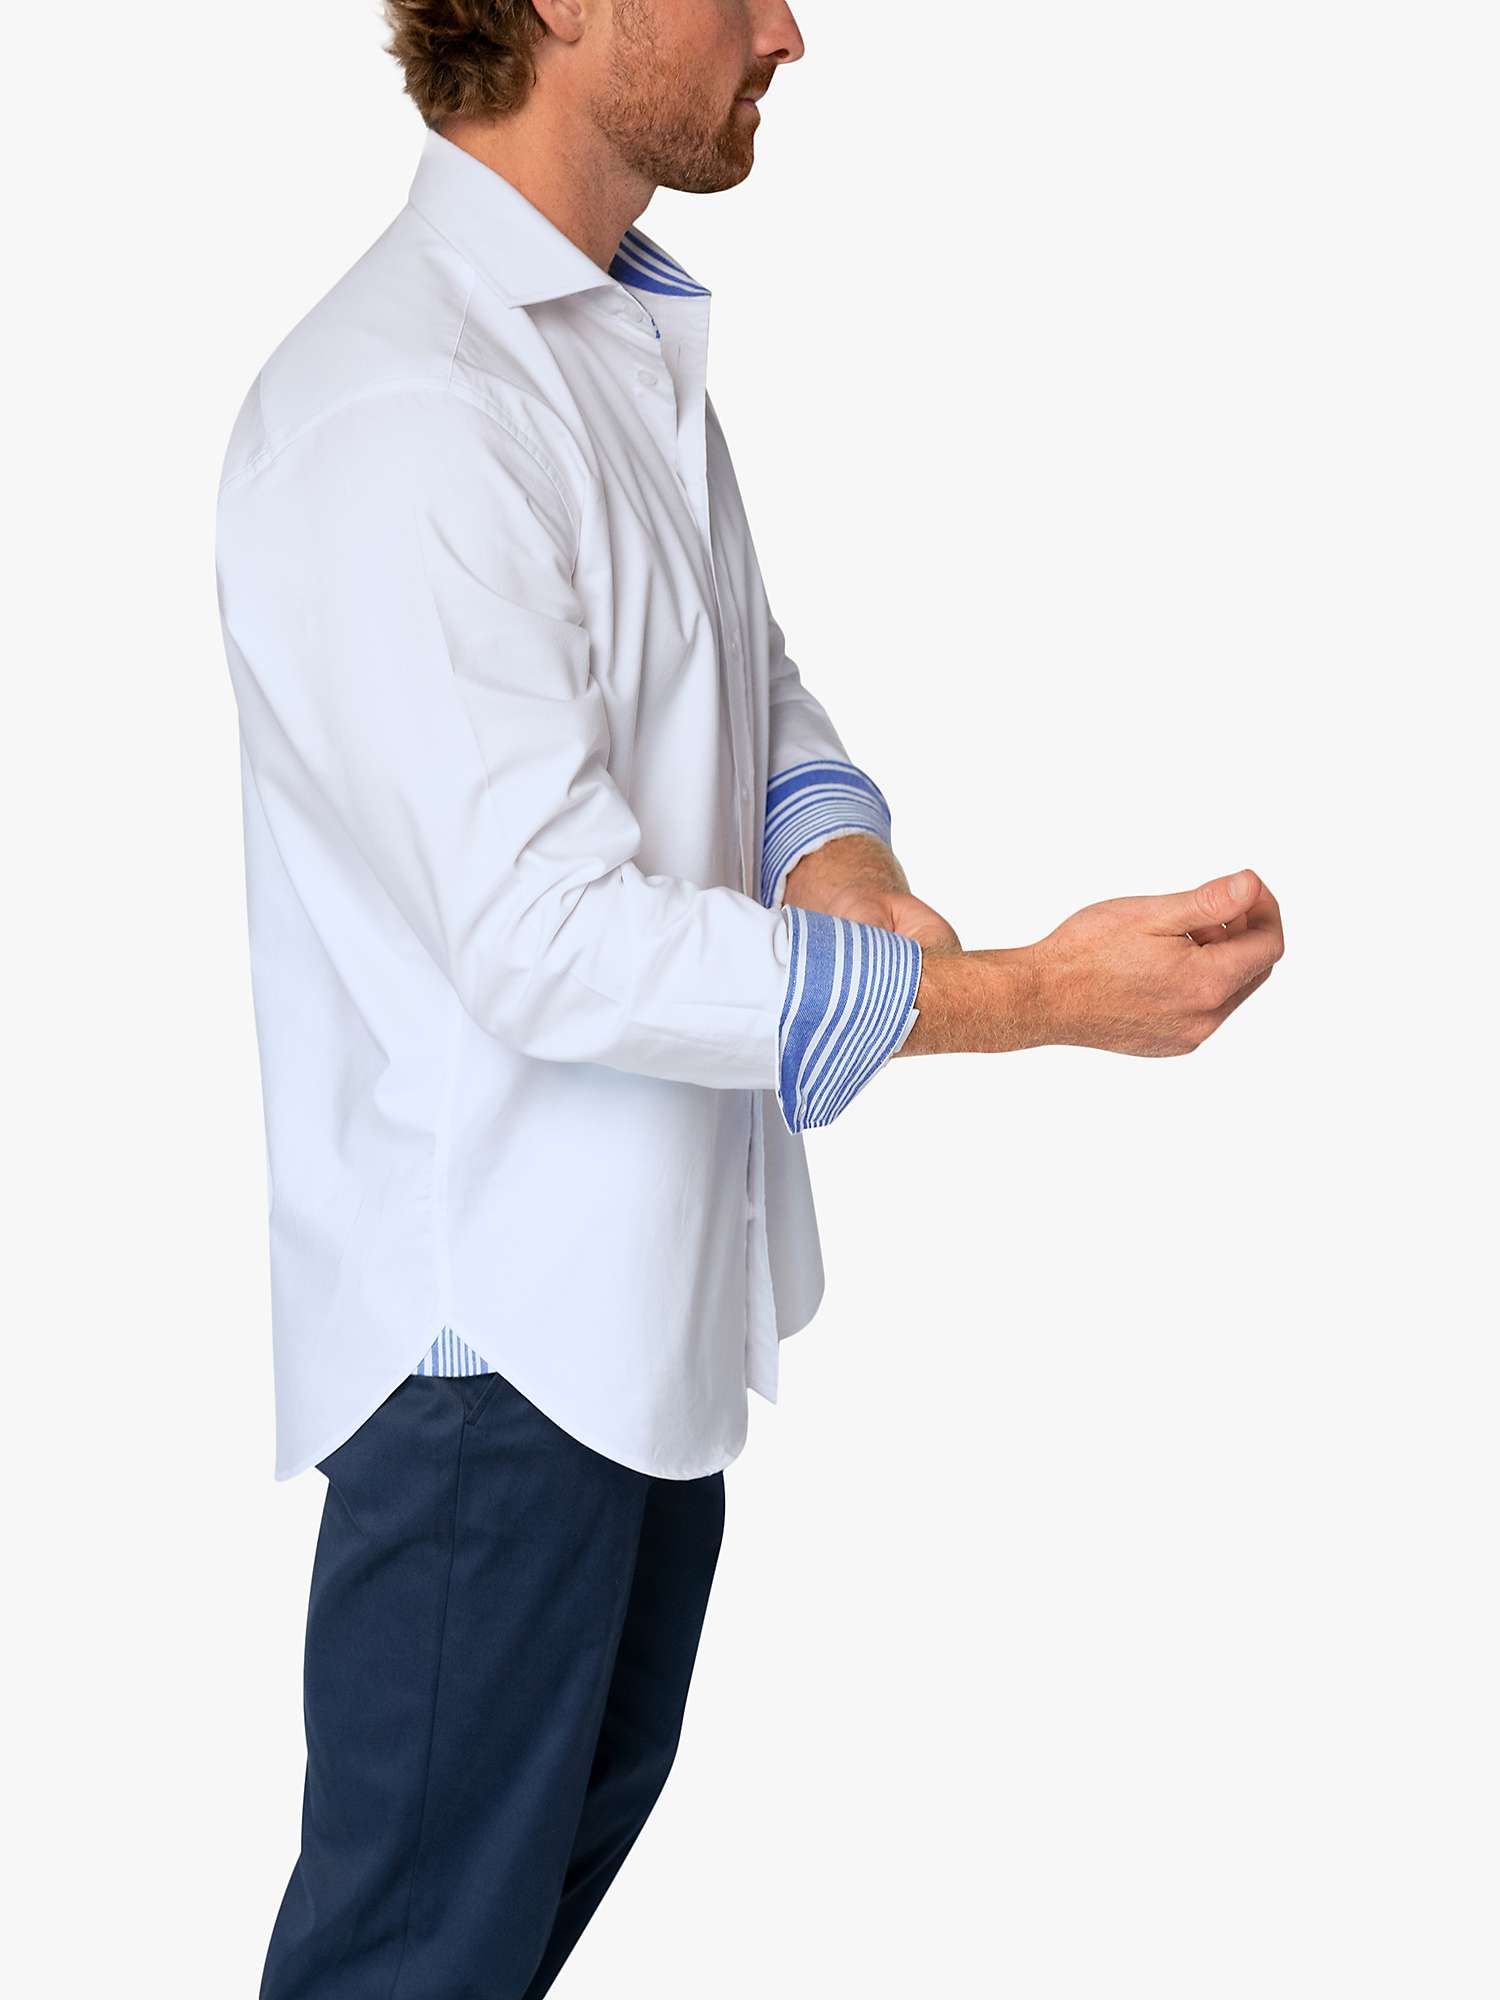 Buy KOY Organic Cotton Oxford Shirt, White Online at johnlewis.com